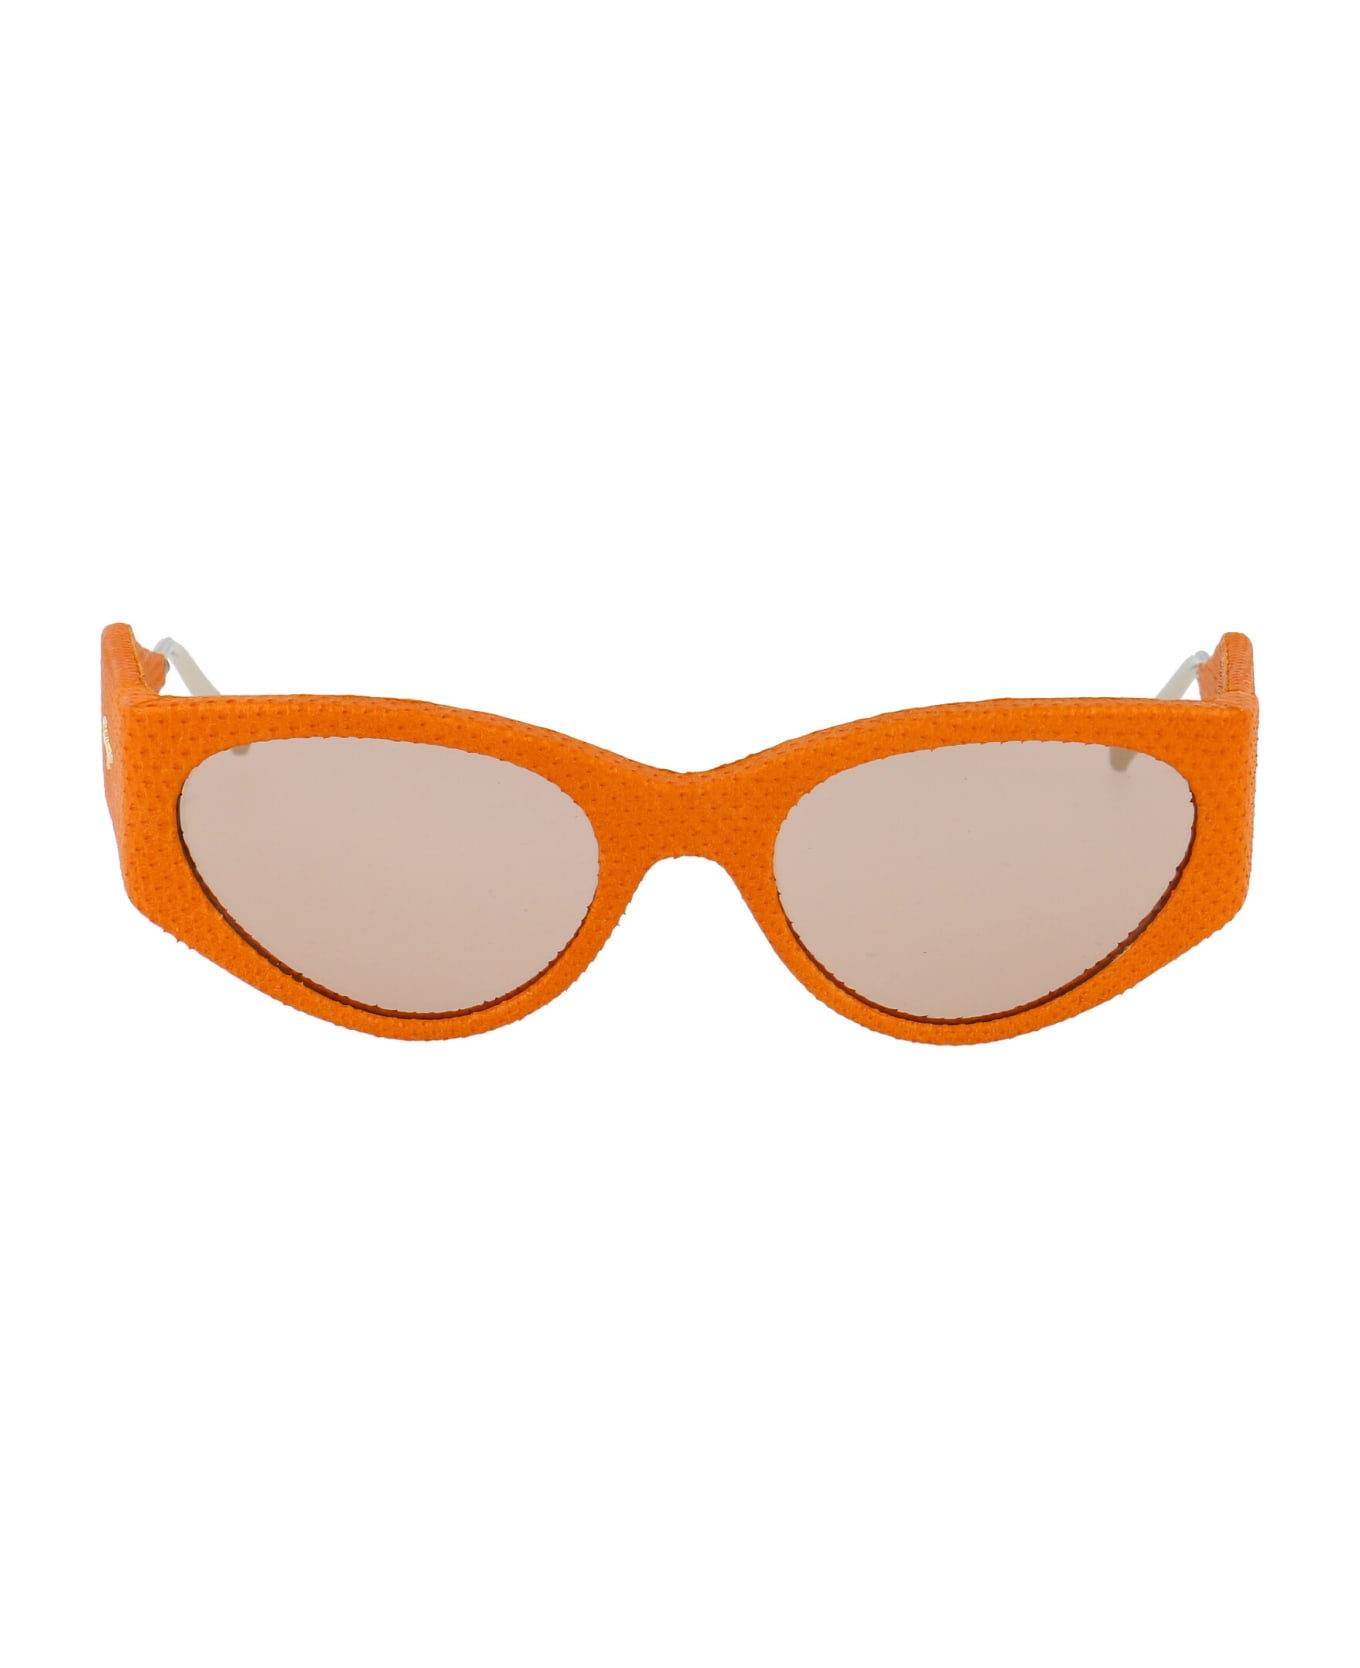 Salvatore Ferragamo Eyewear Sf950sl Sunglasses - 712 GOLDEN KARUNG サングラス